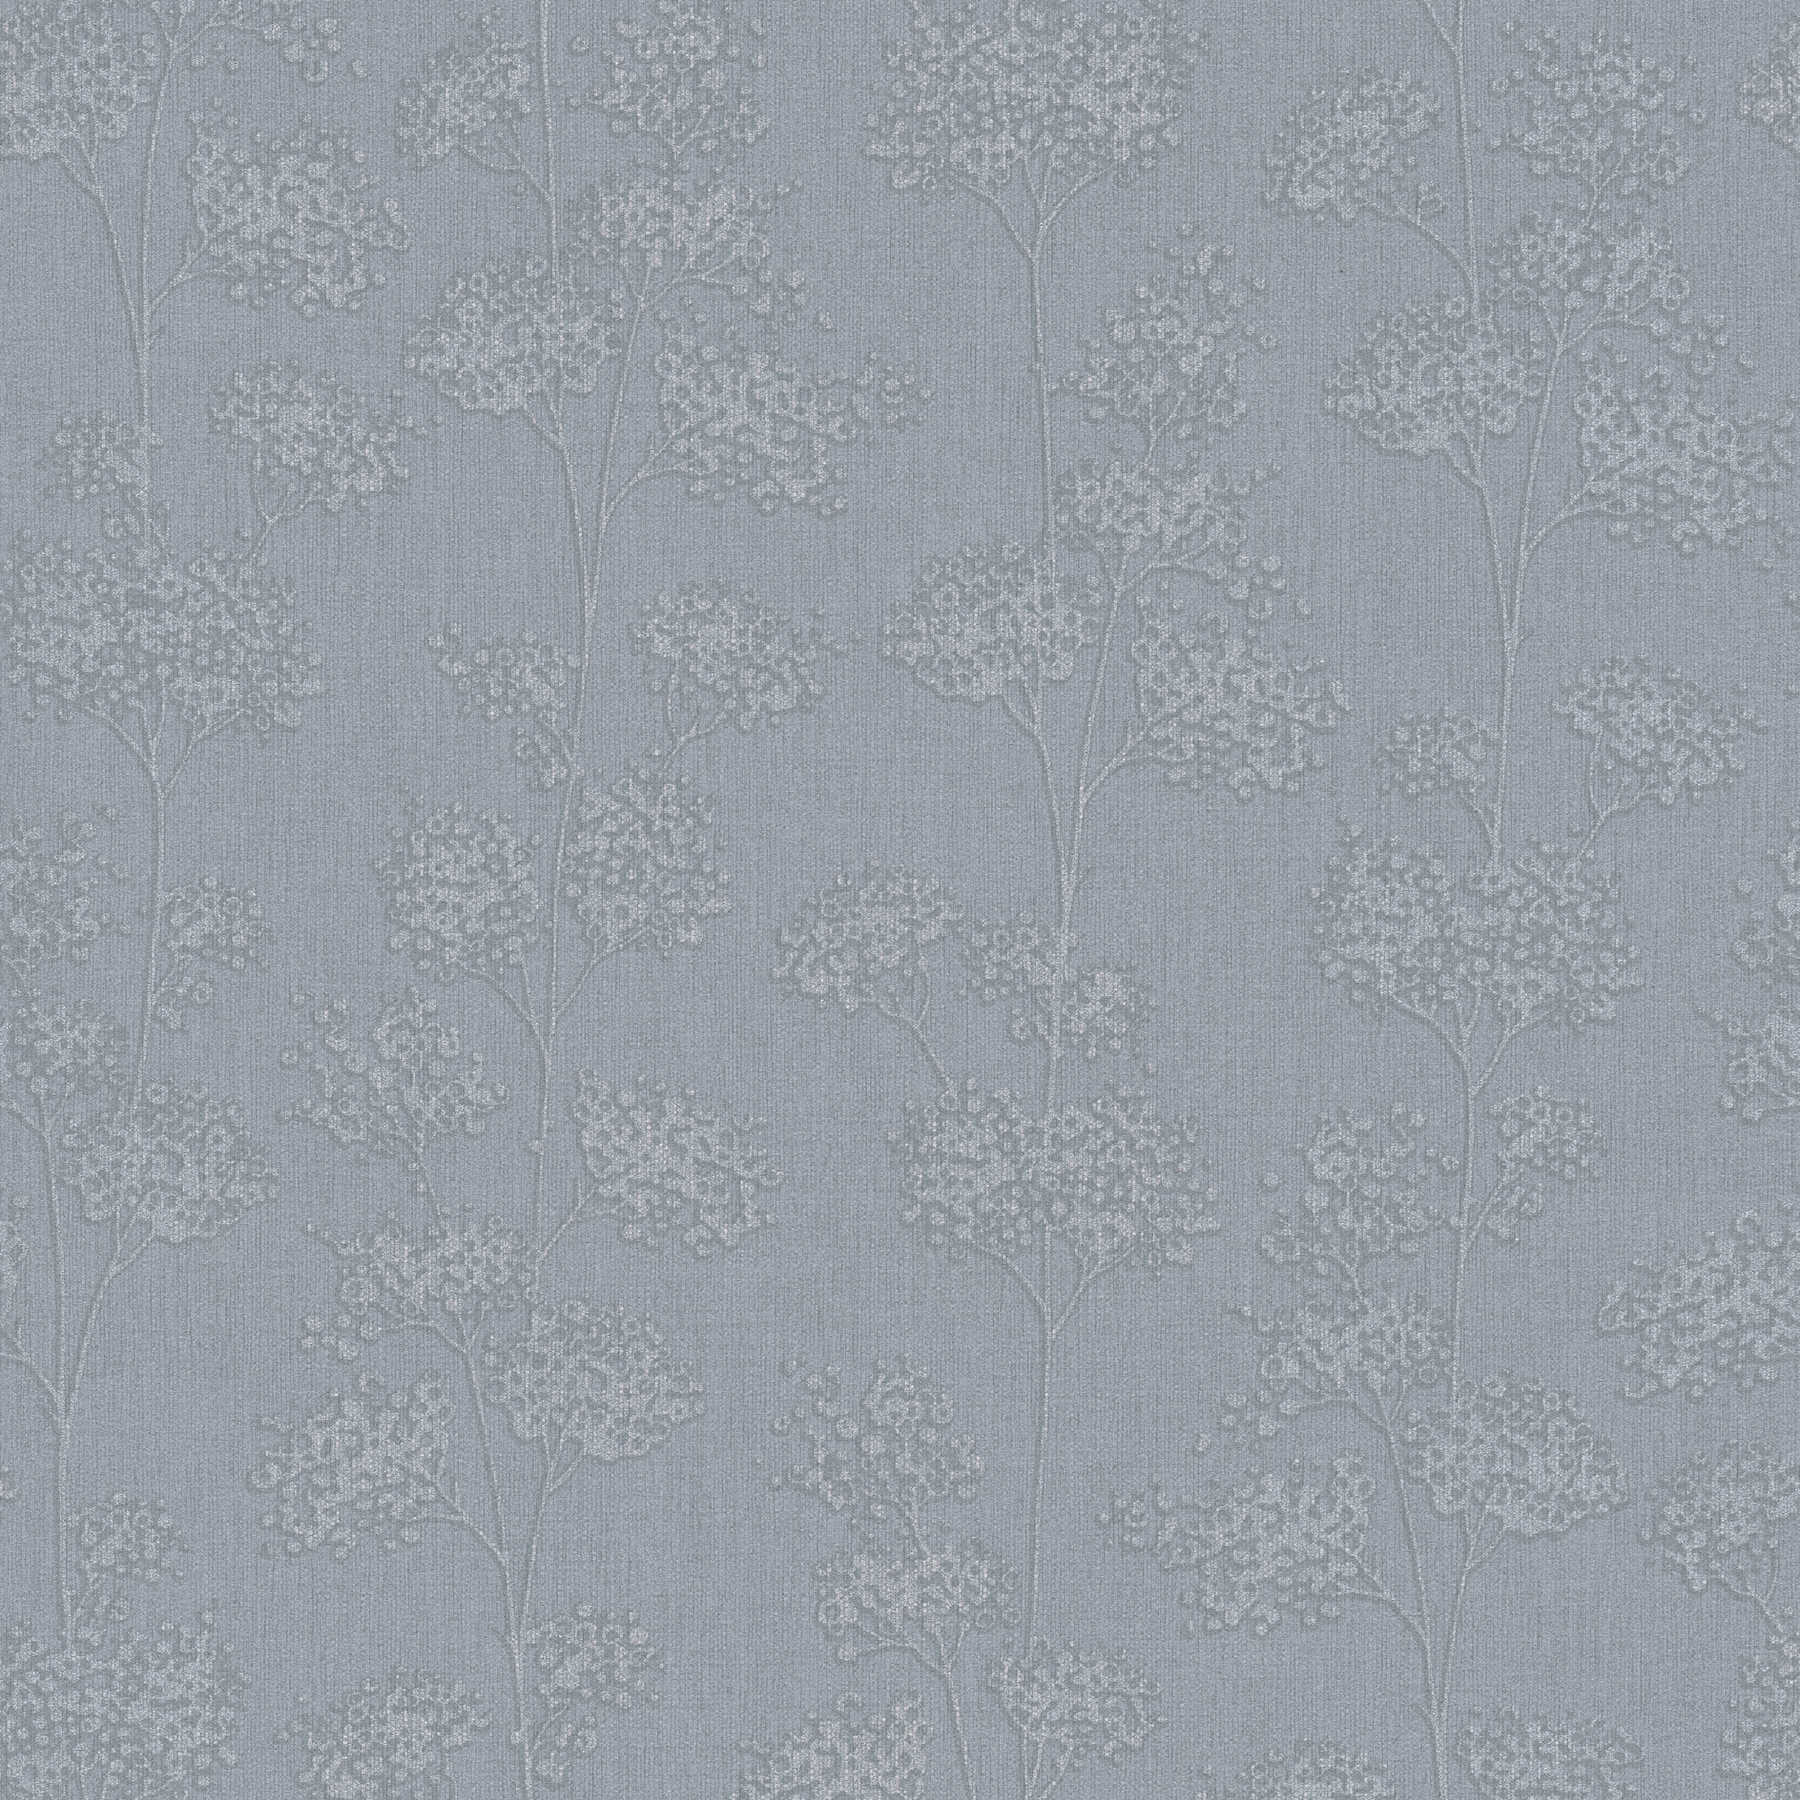 Wallpaper nature pattern with linen & metallic effect - grey, metallic
